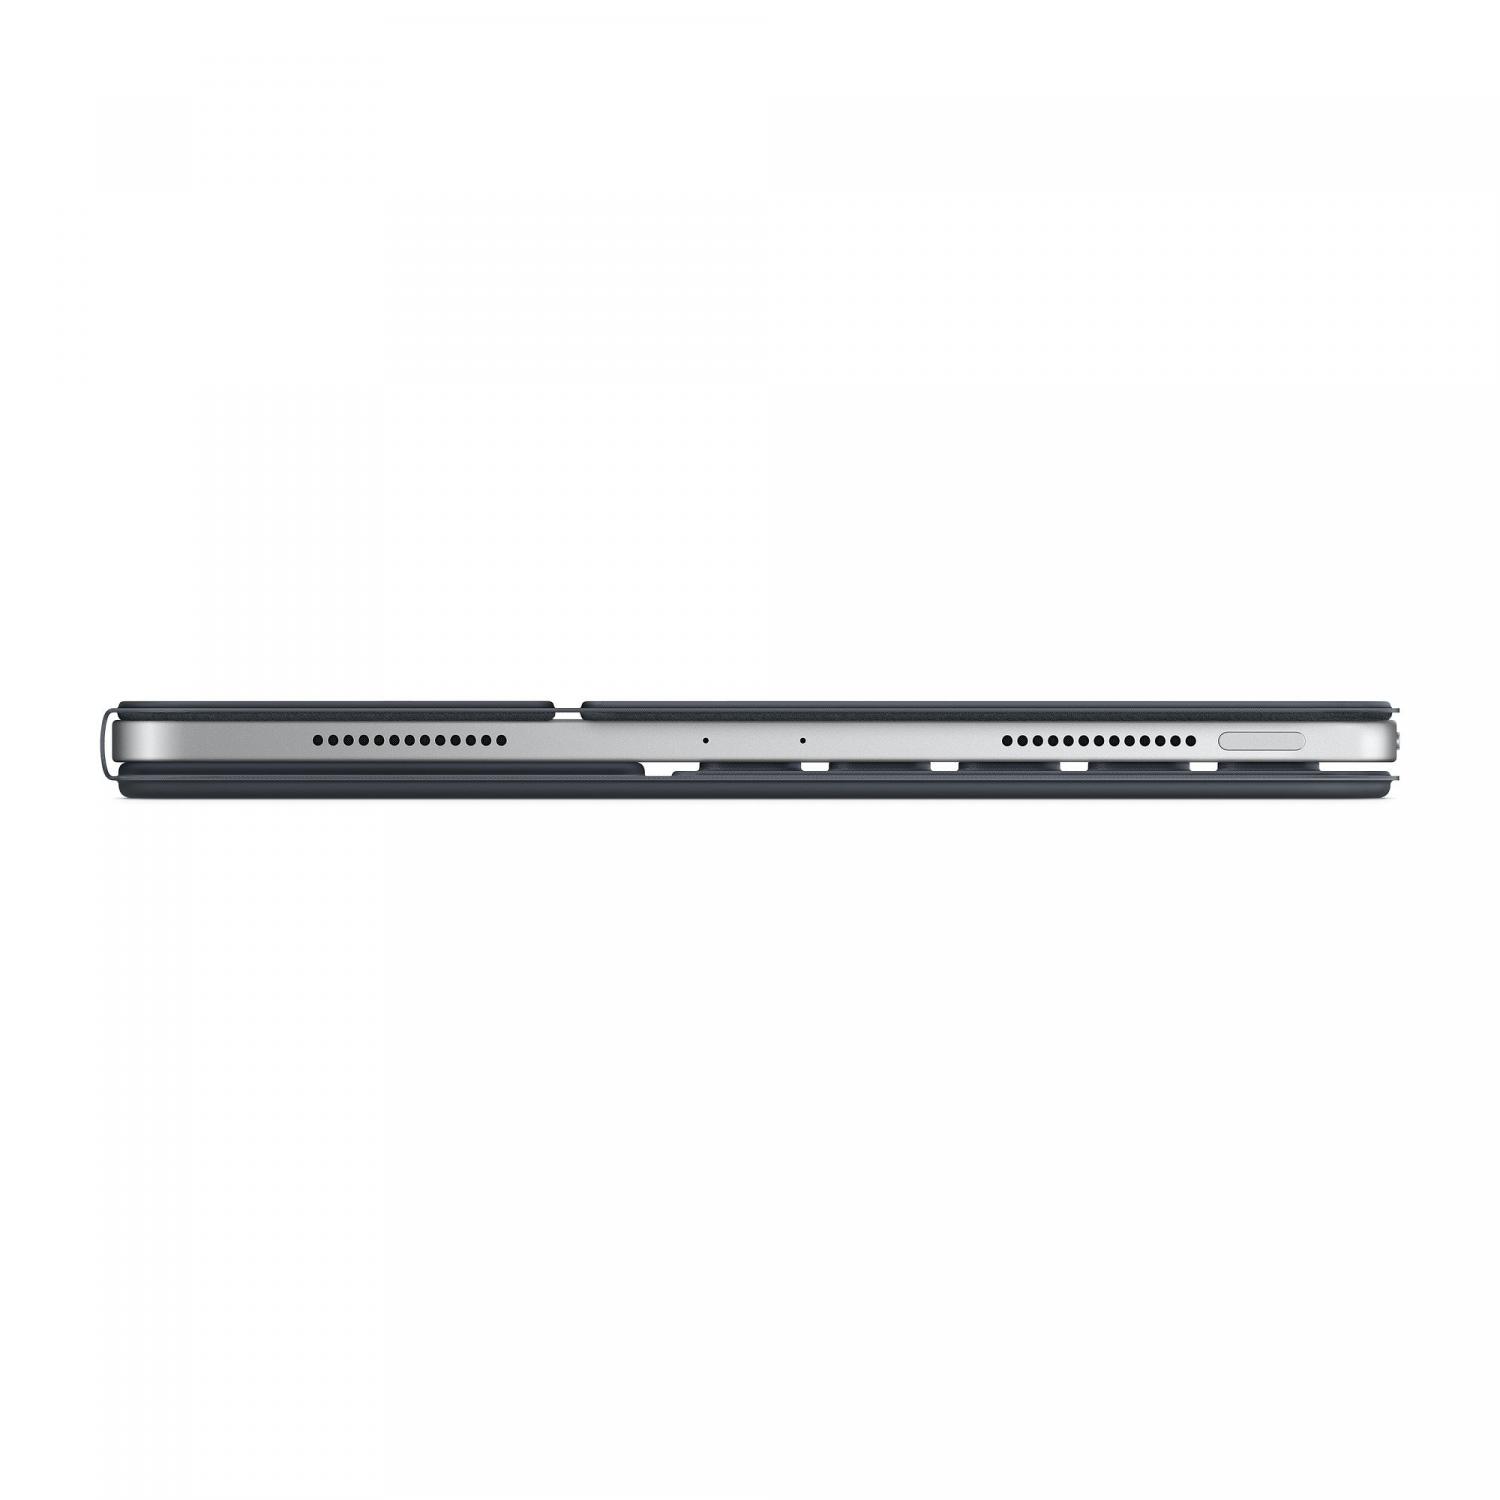 Apple MU8G2LL/A Smart Keyboard Folio for 11-inch iPad Pro